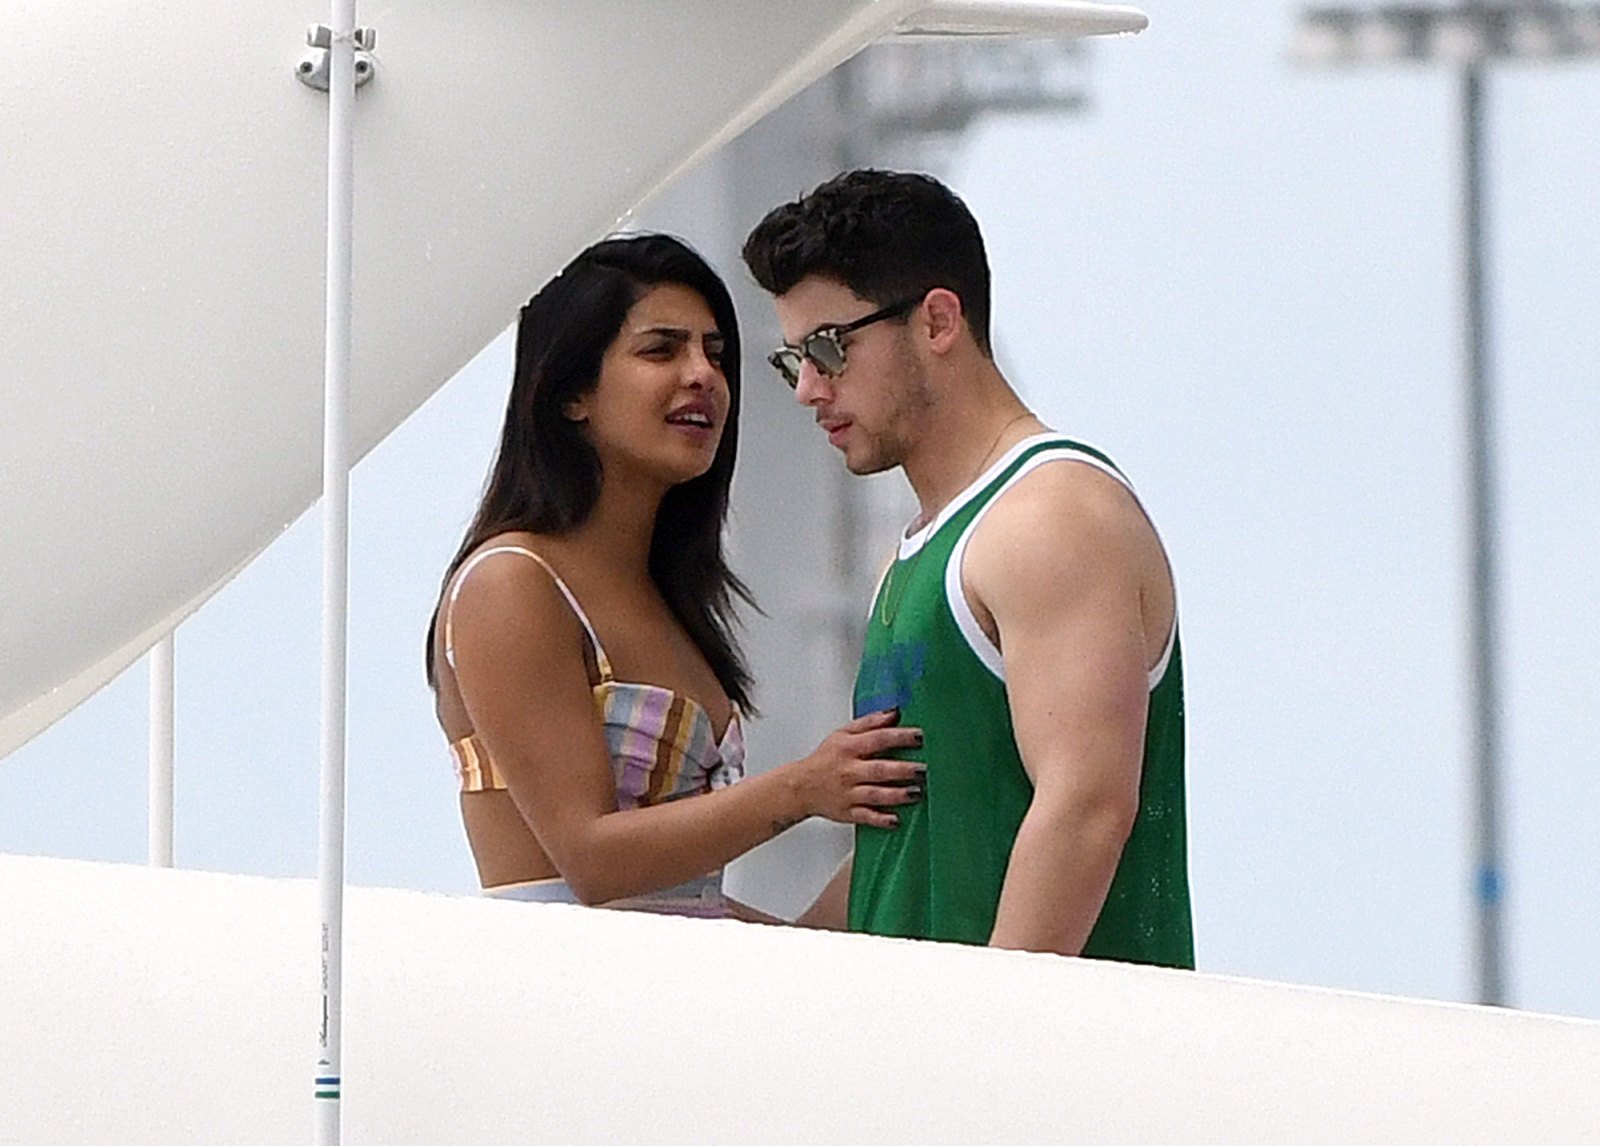 Priyanka Chopra, Sophie Turner Dance to 'Sucker' On Yacht, Ride Jet Skis on Miami Trip With Jonas Brothers